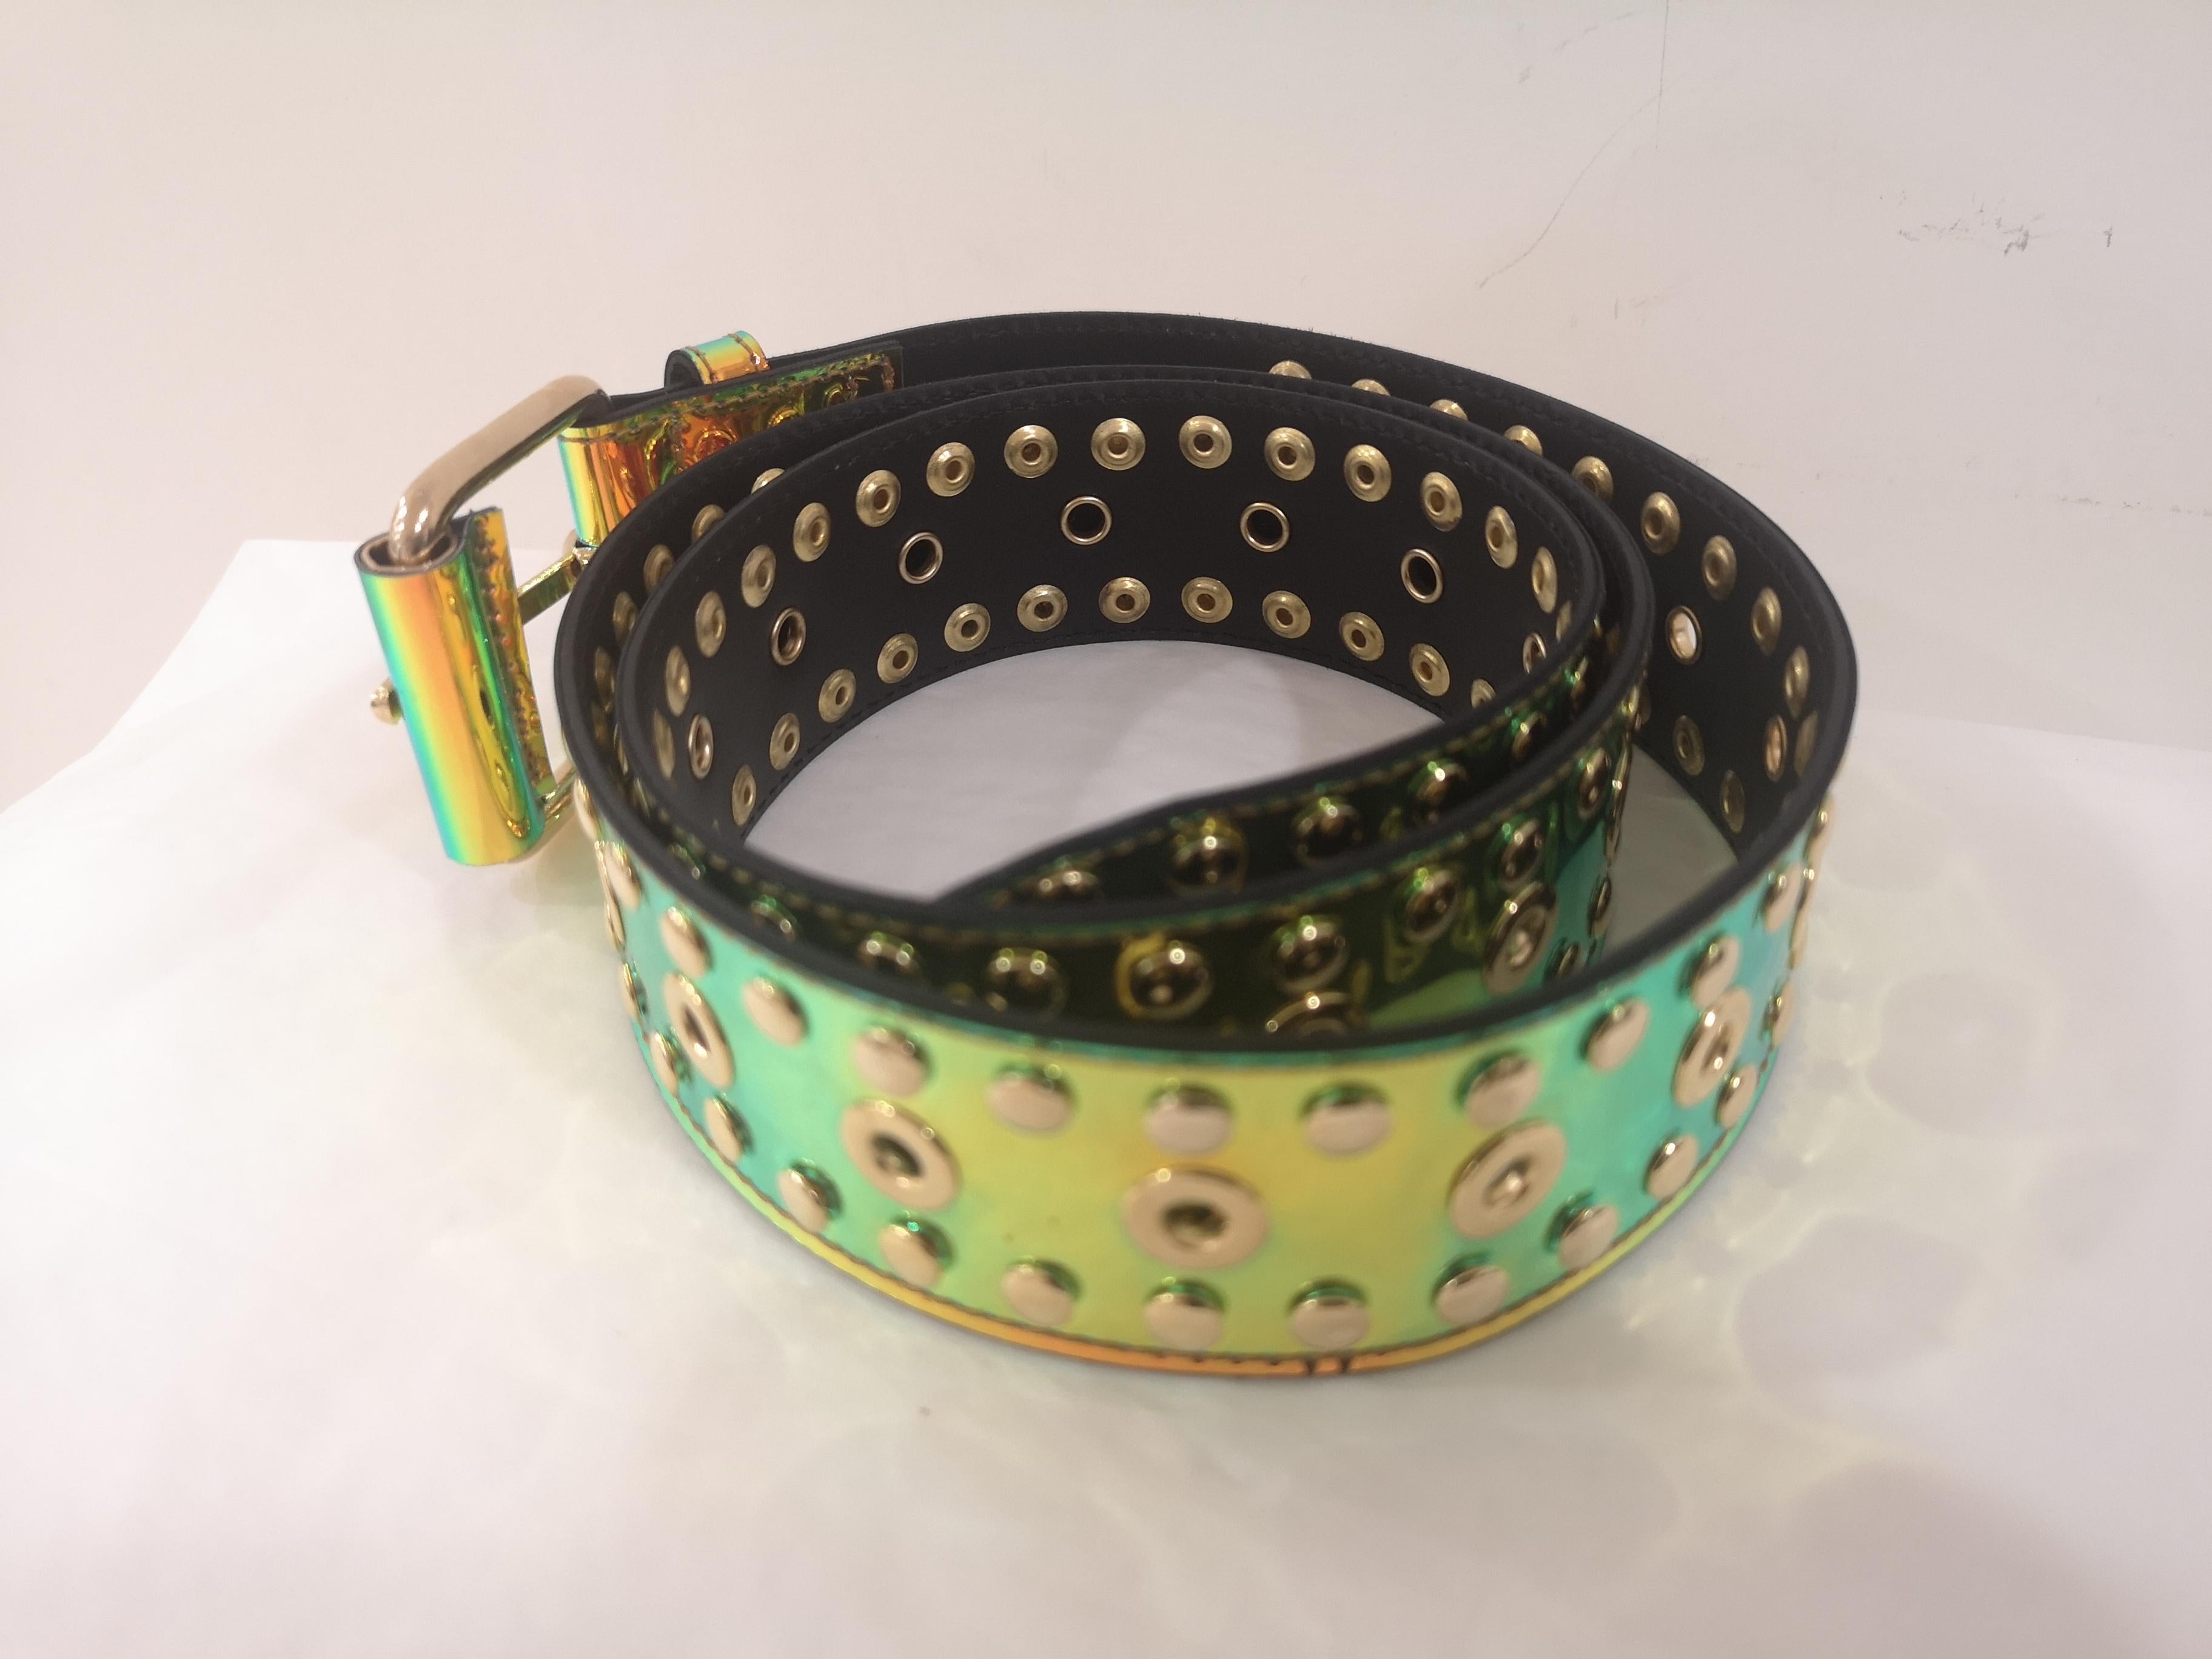 Patent Leather handmade belt 2